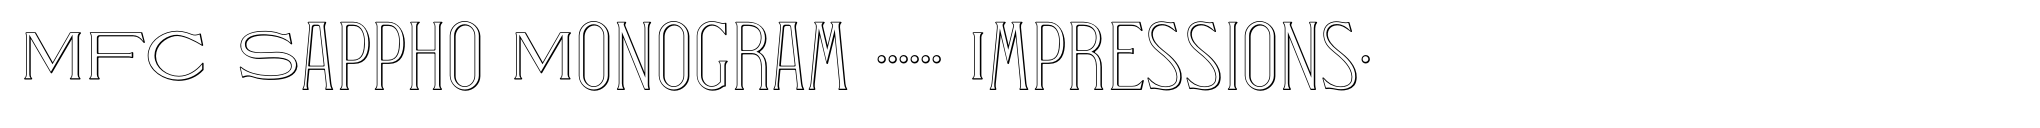 MFC Sappho Monogram (10000 Impressions) image